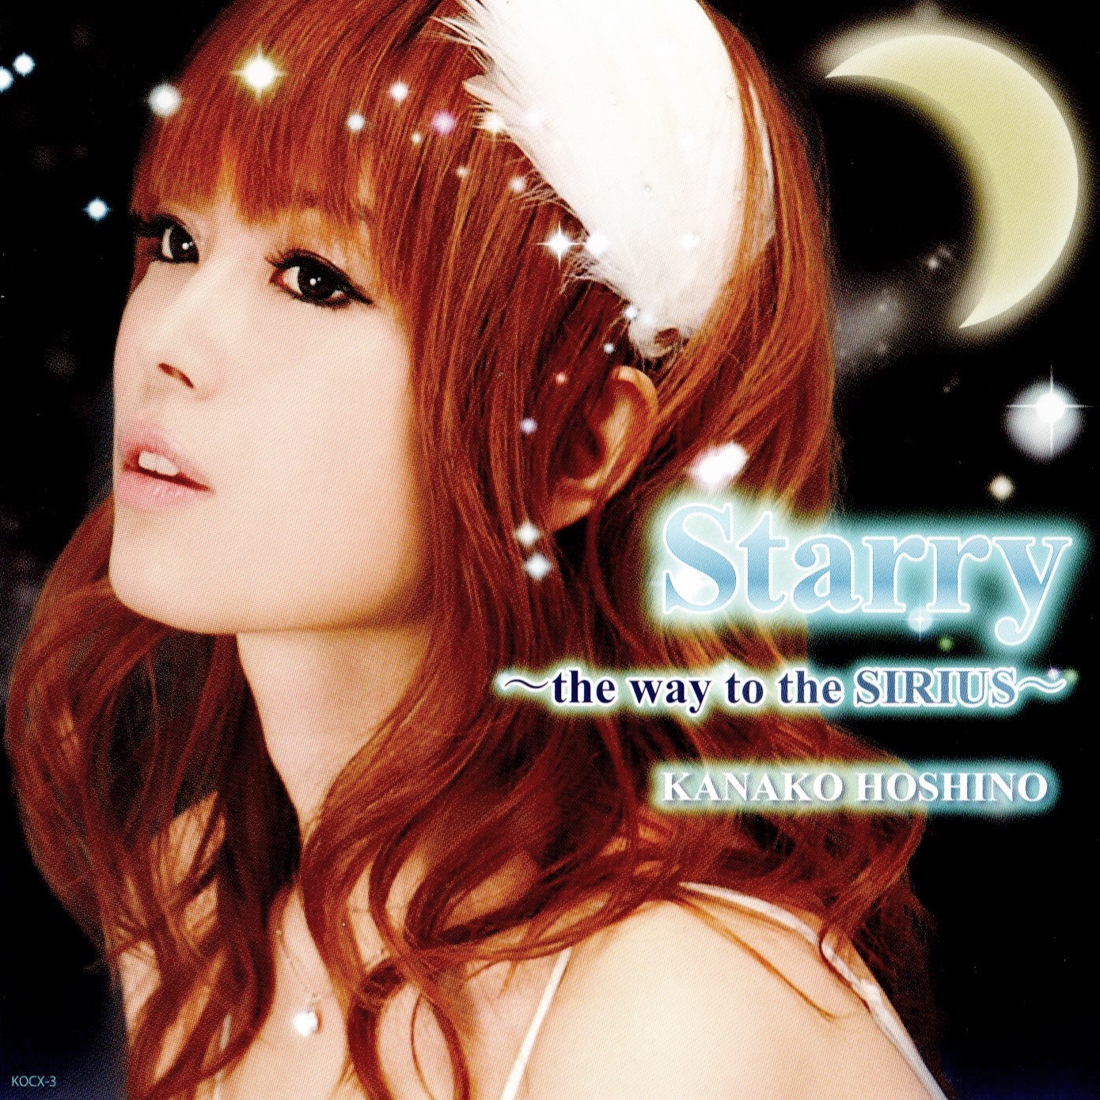 20181001.1016.05 Kanako Hoshino - Starry ~the way to the Sirius~ (Limited edition) (2009) (FLAC) cover.jpg